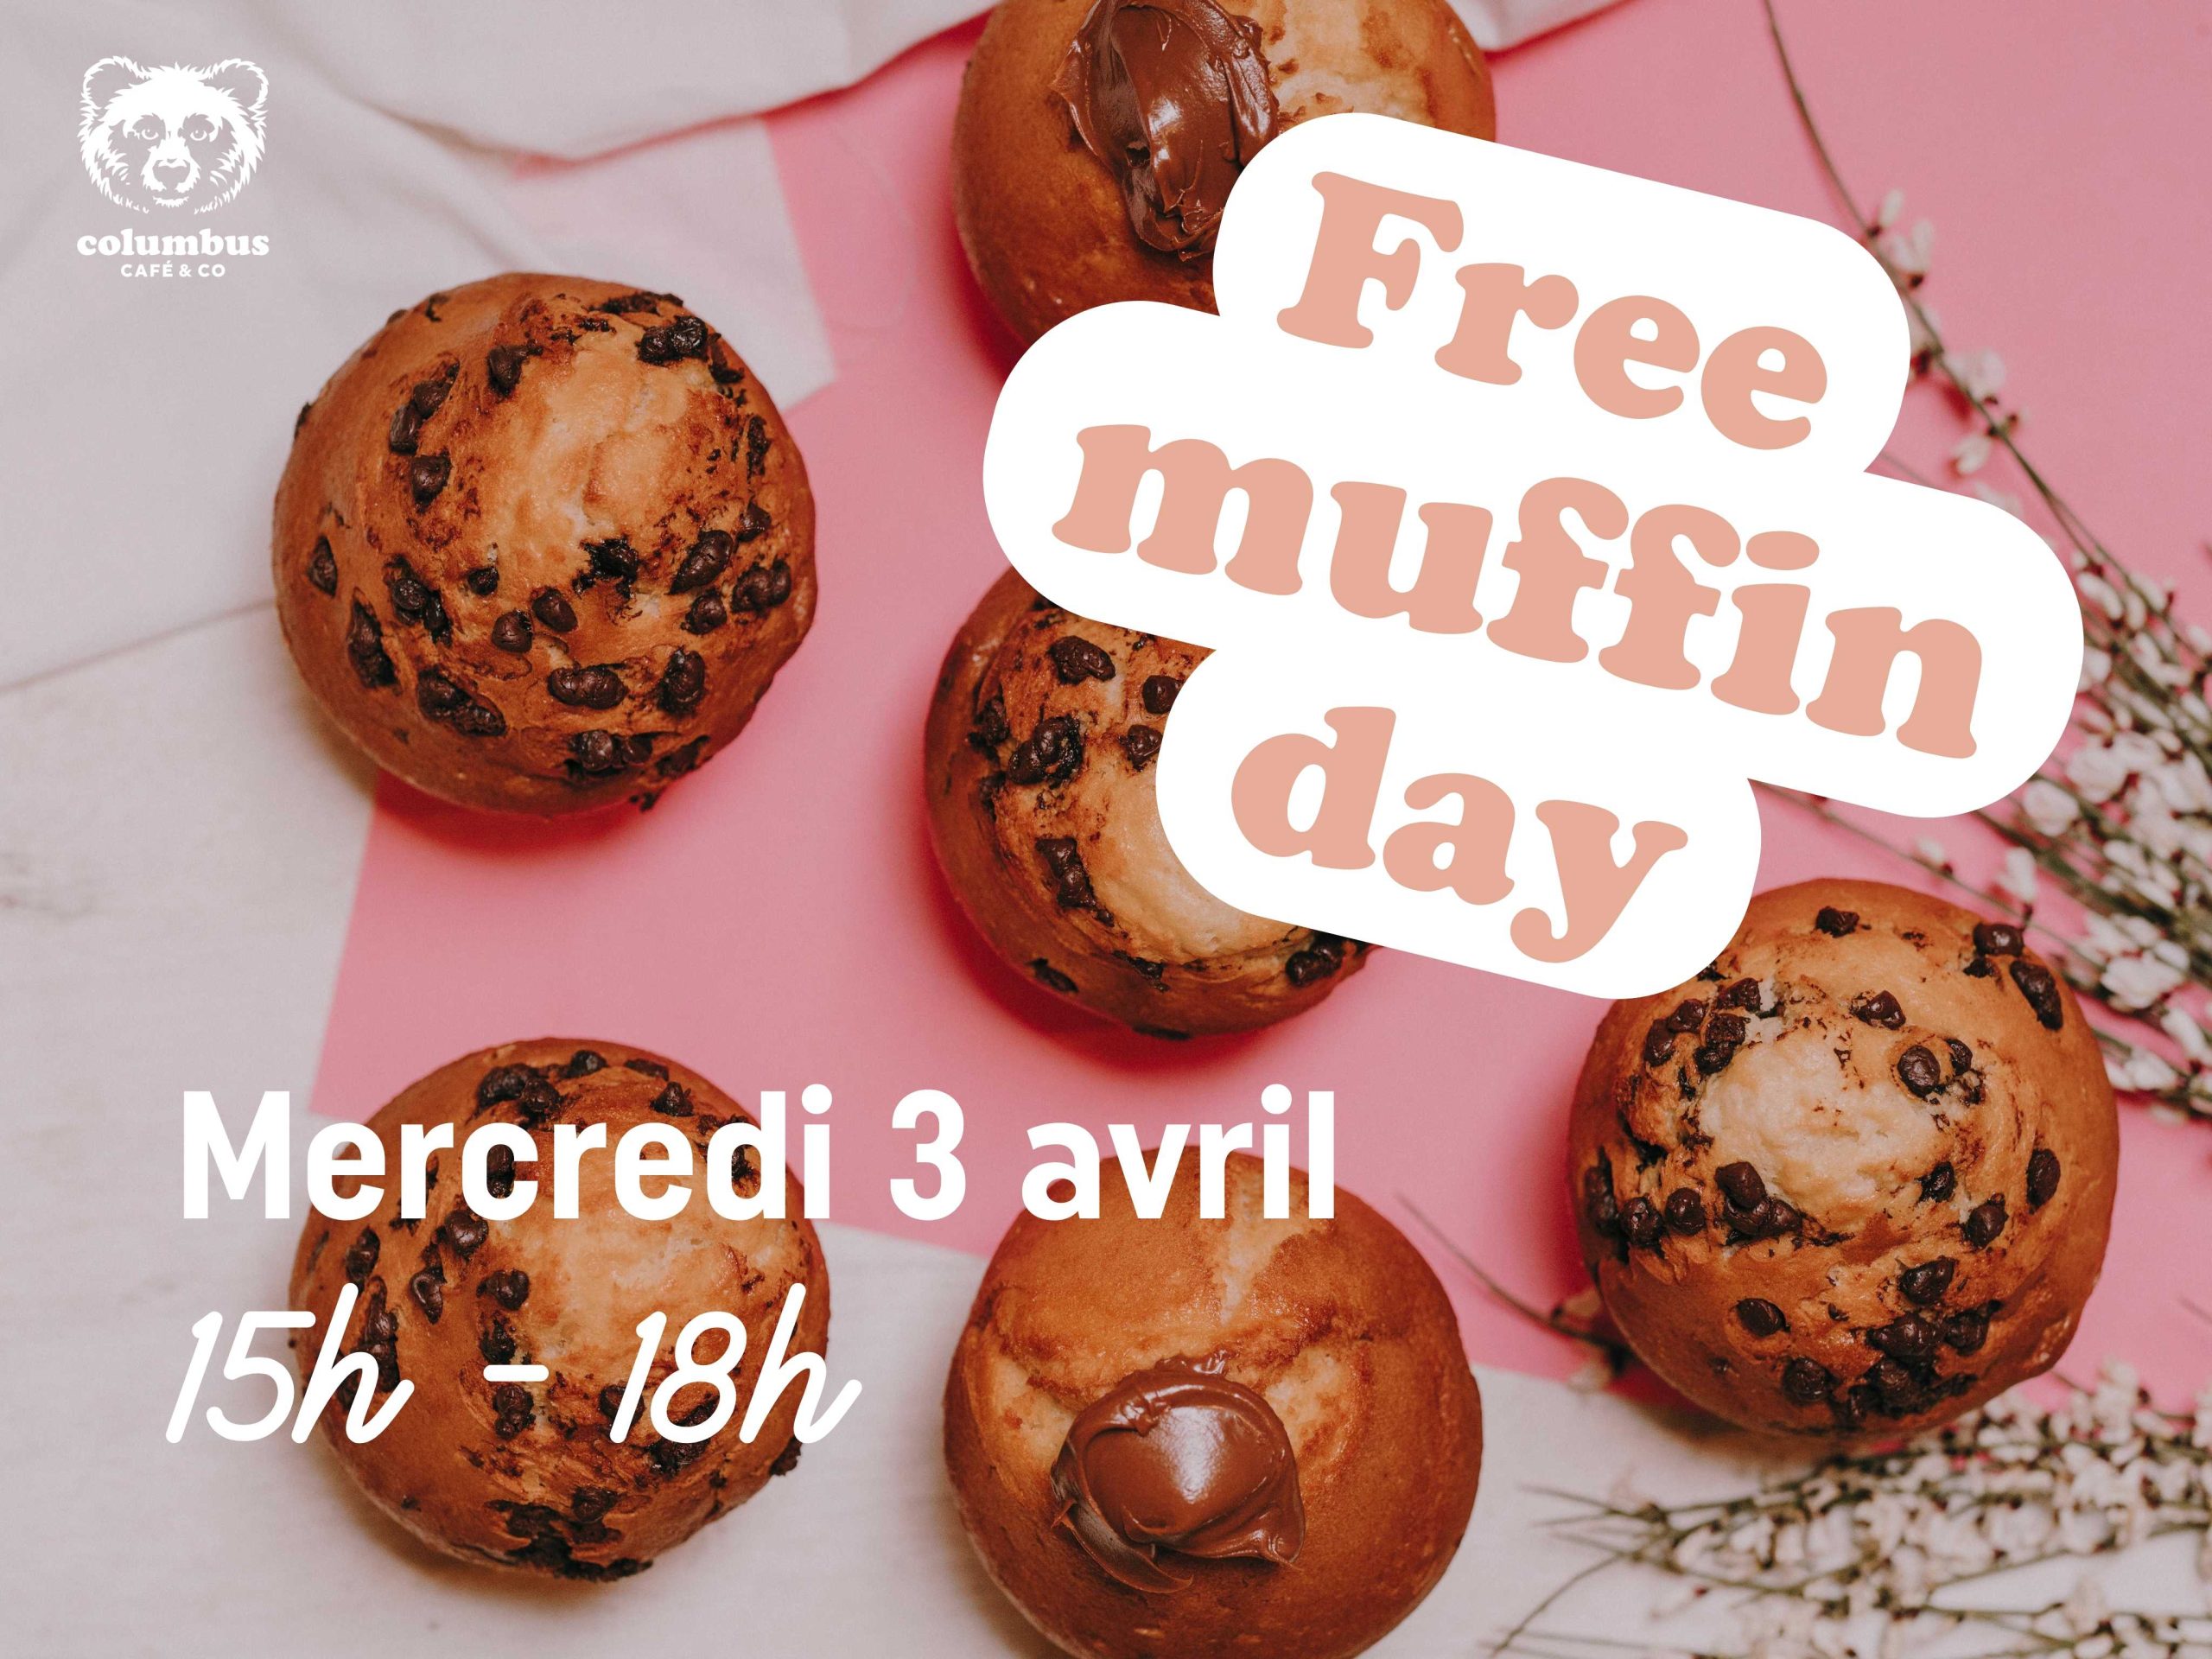 Free_Muffin_Day_natio